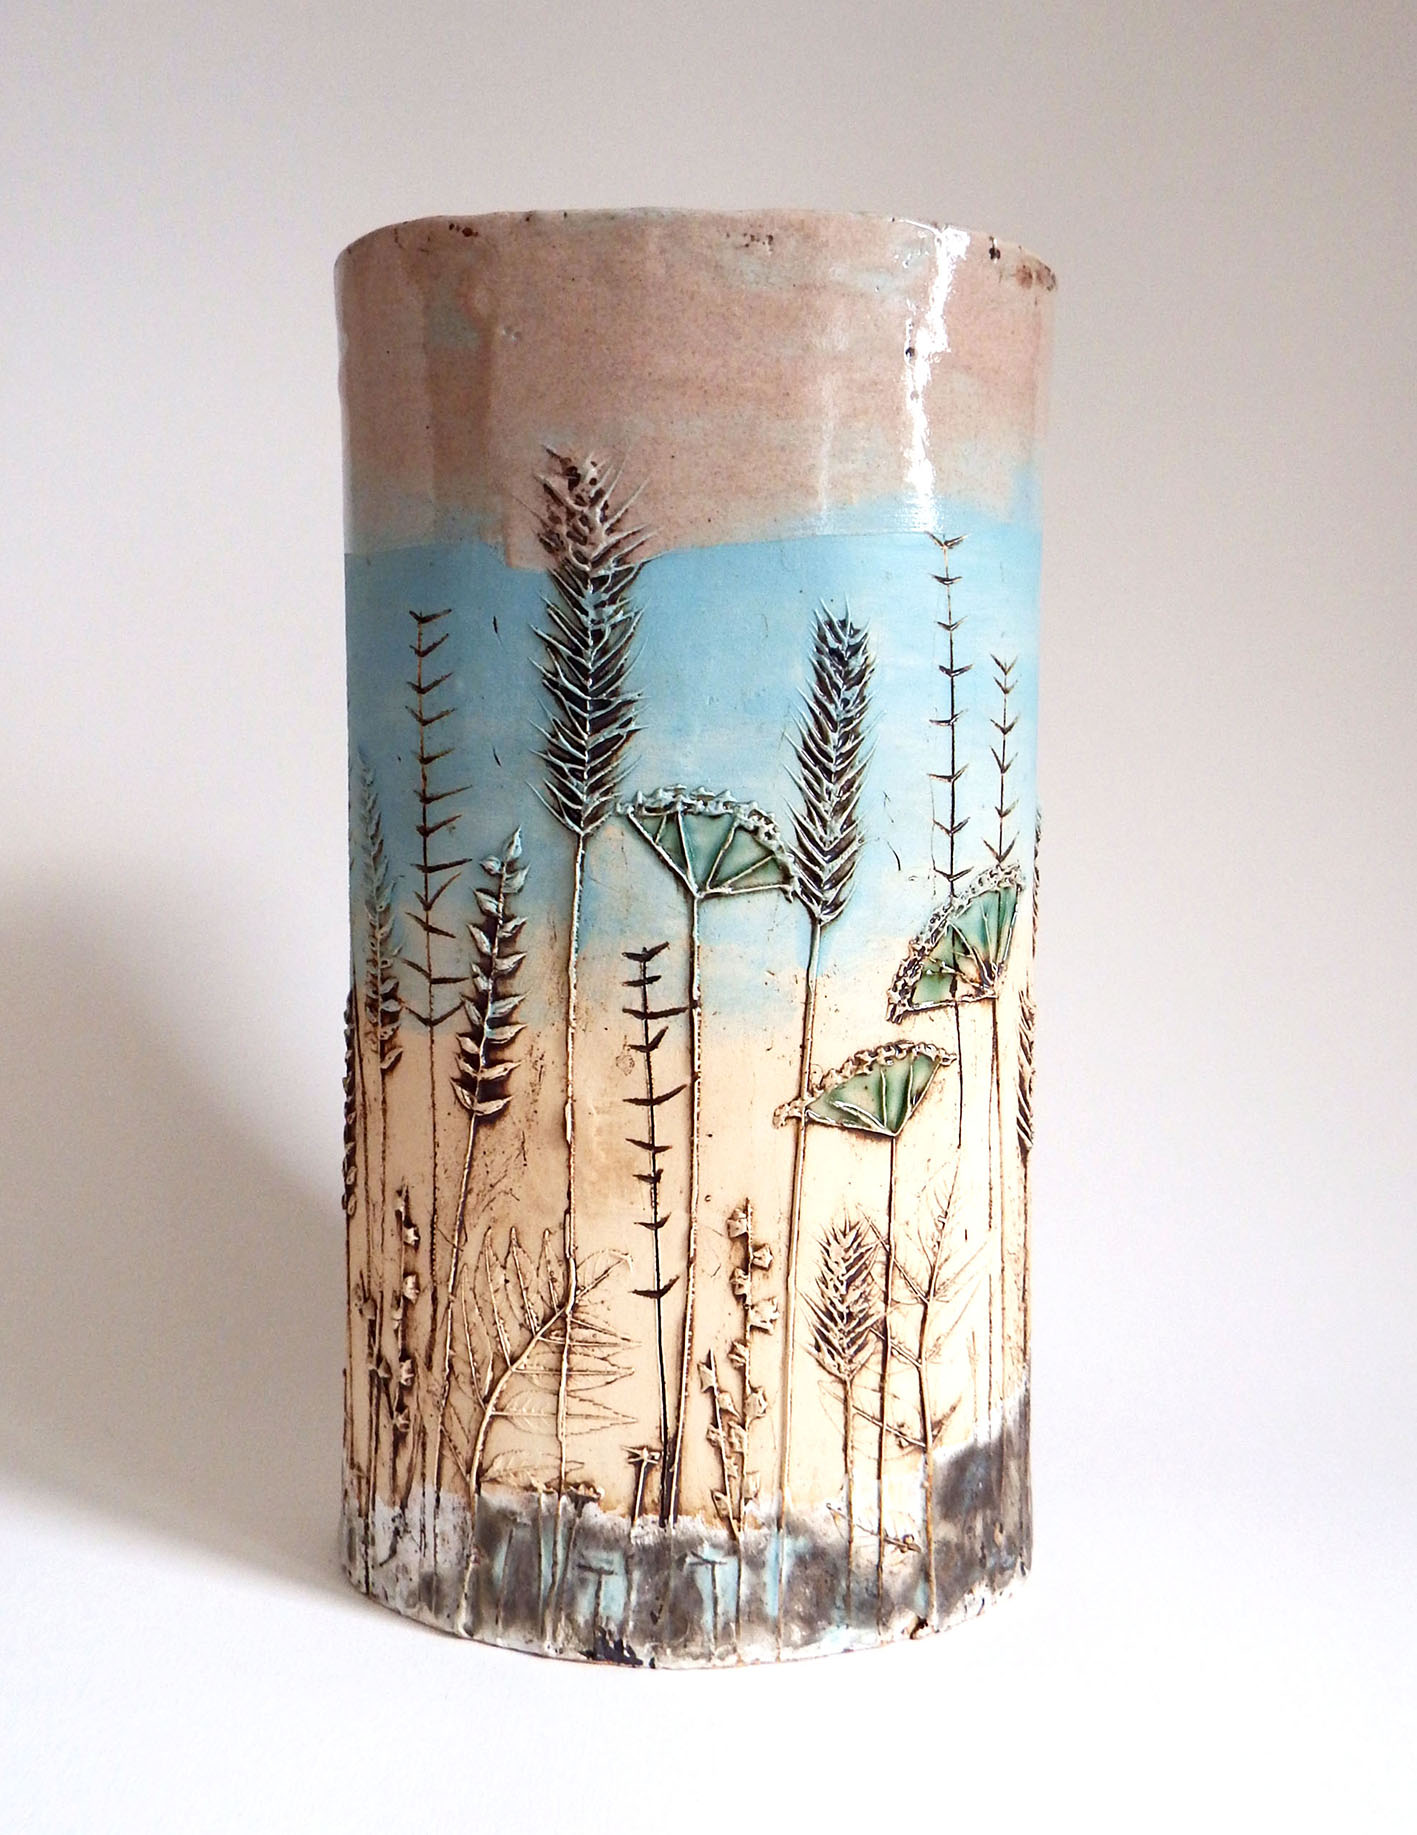 'Meadow Heather Blue' by artist Katie Smith